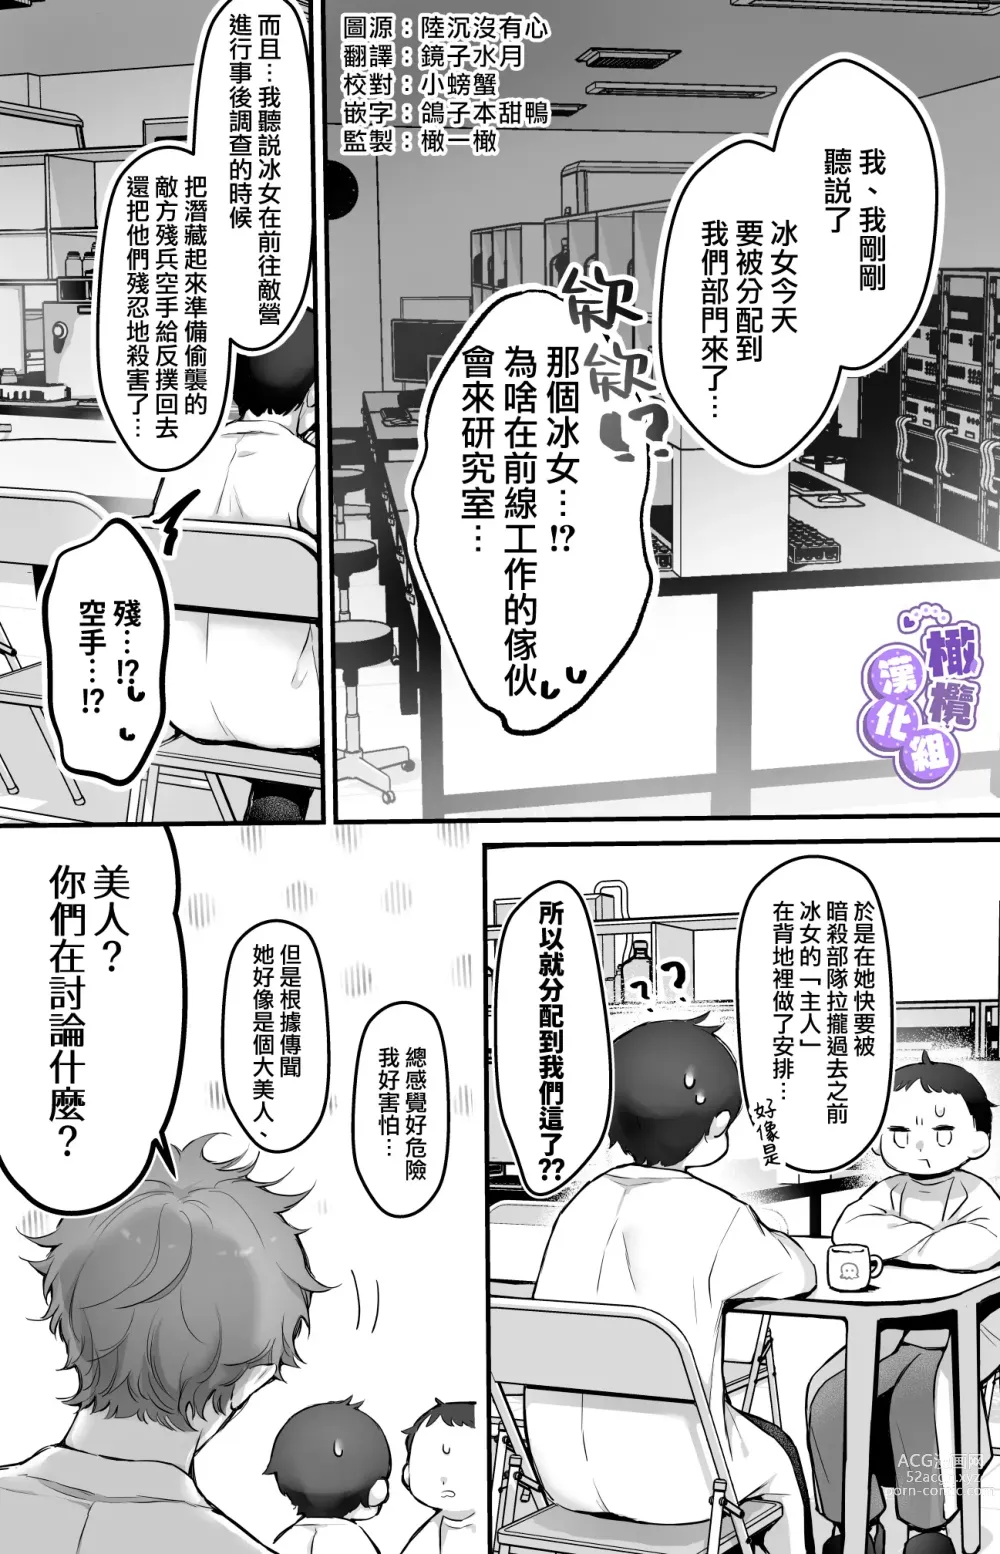 Page 4 of doujinshi 心荡神驰的冬华〜史莱姆捕获篇〜